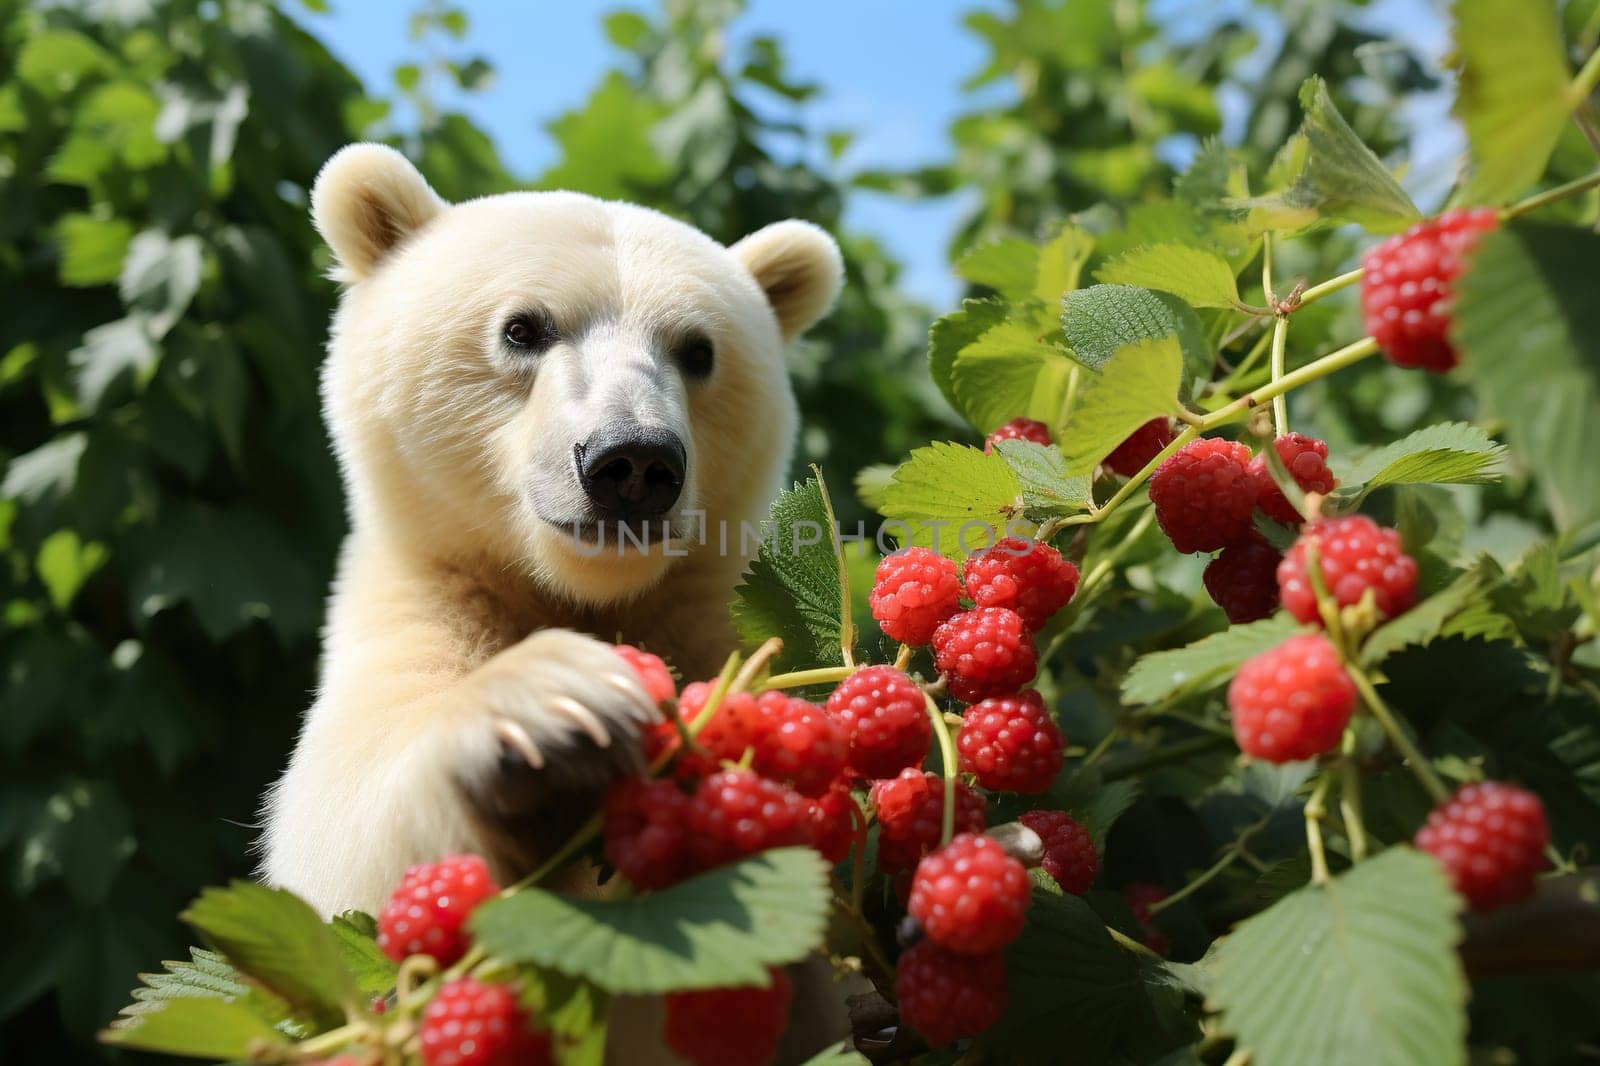 A polar bear picks raspberries from a bush in the forest.